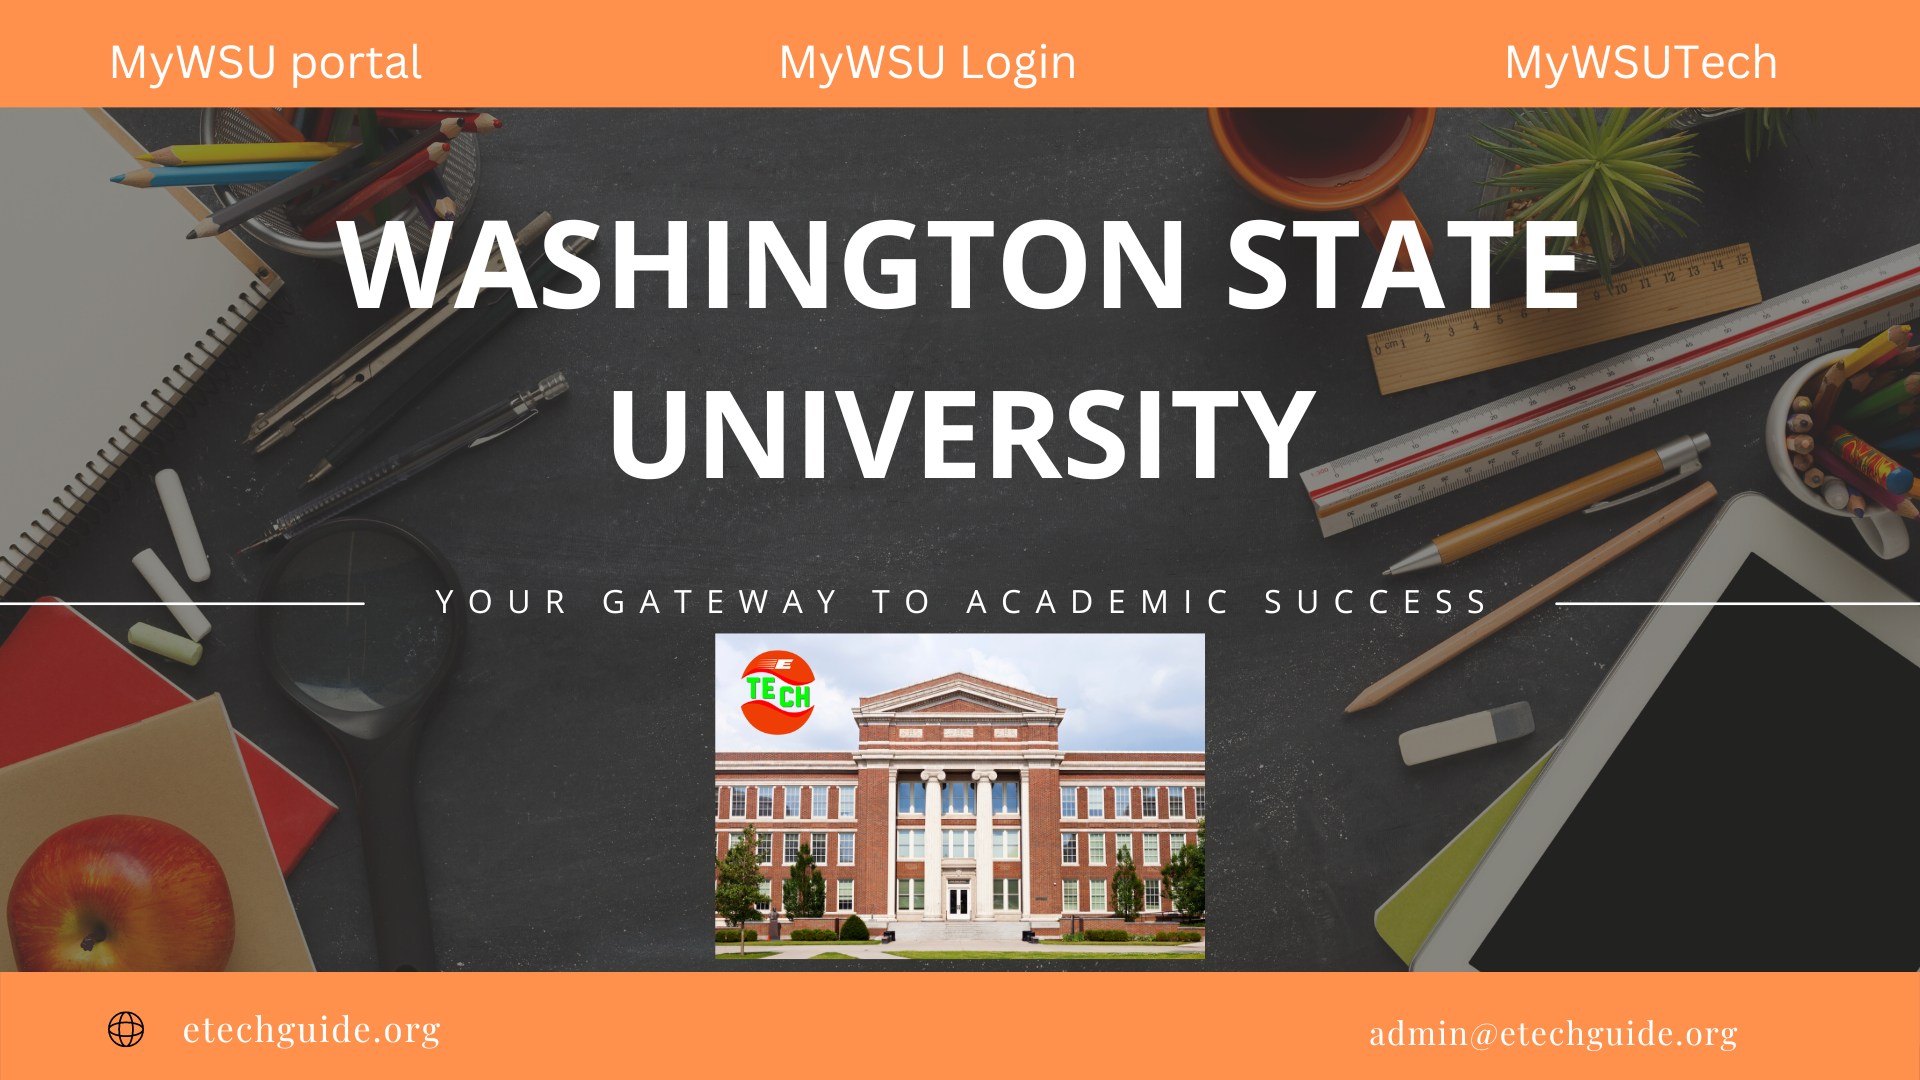 MyWSU portal; MyWSU Login; MyWSUTech; Washington State University;